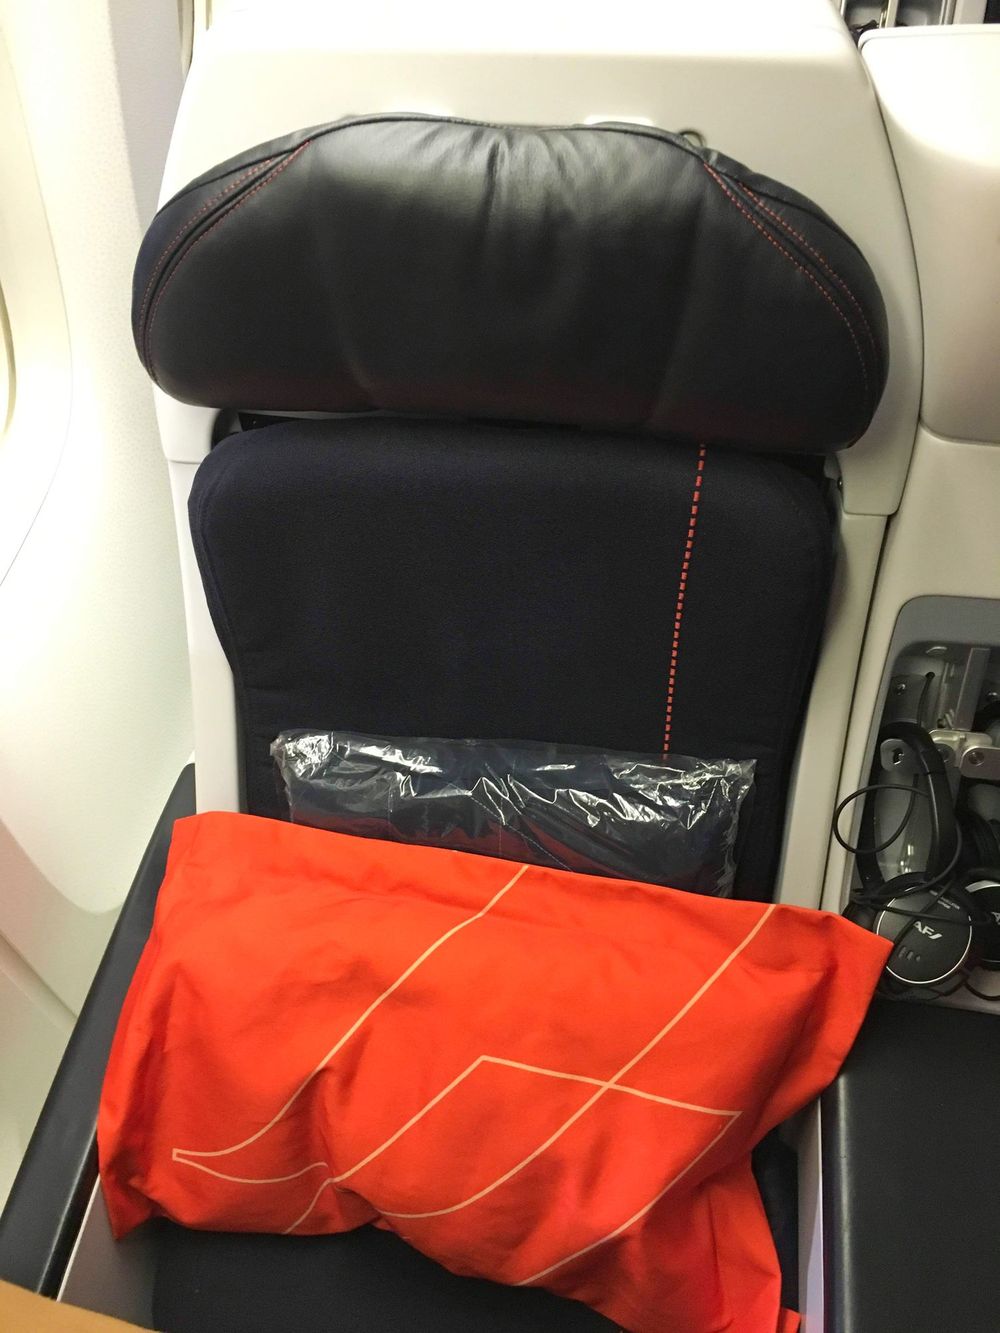 Air France Premium Economy Seats Review